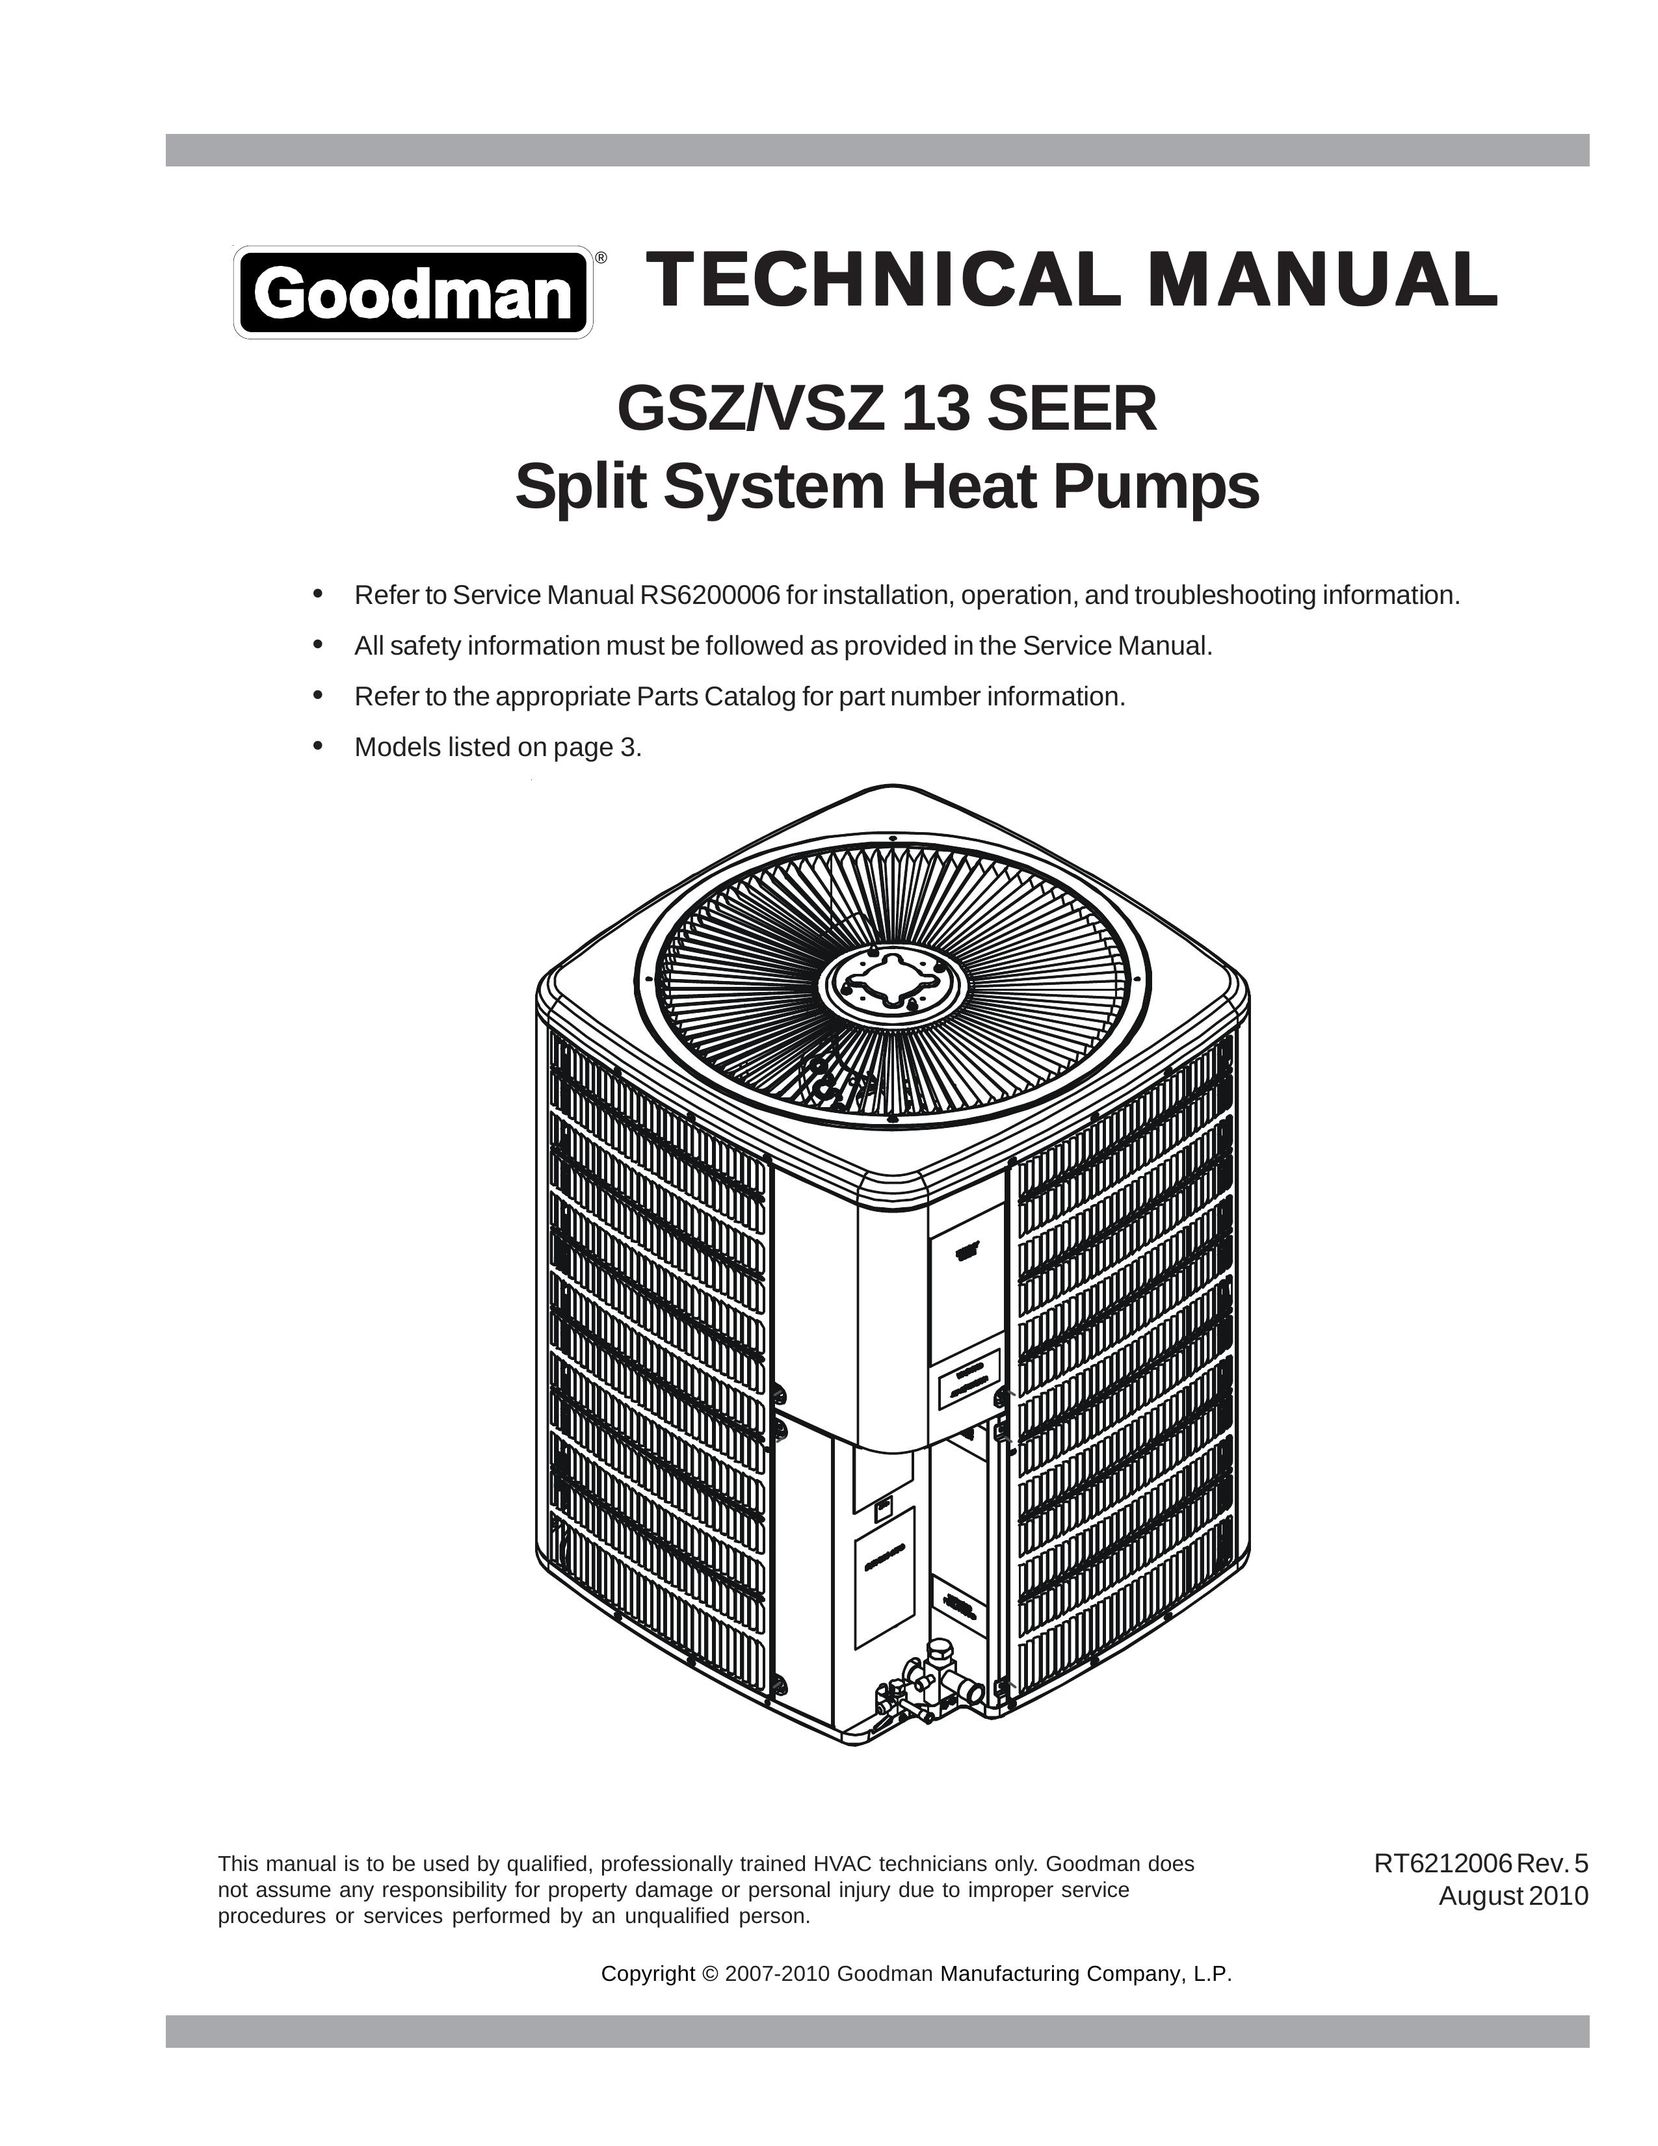 Goodman Mfg GSZ/VSZ 13 SEER Heat Pump User Manual